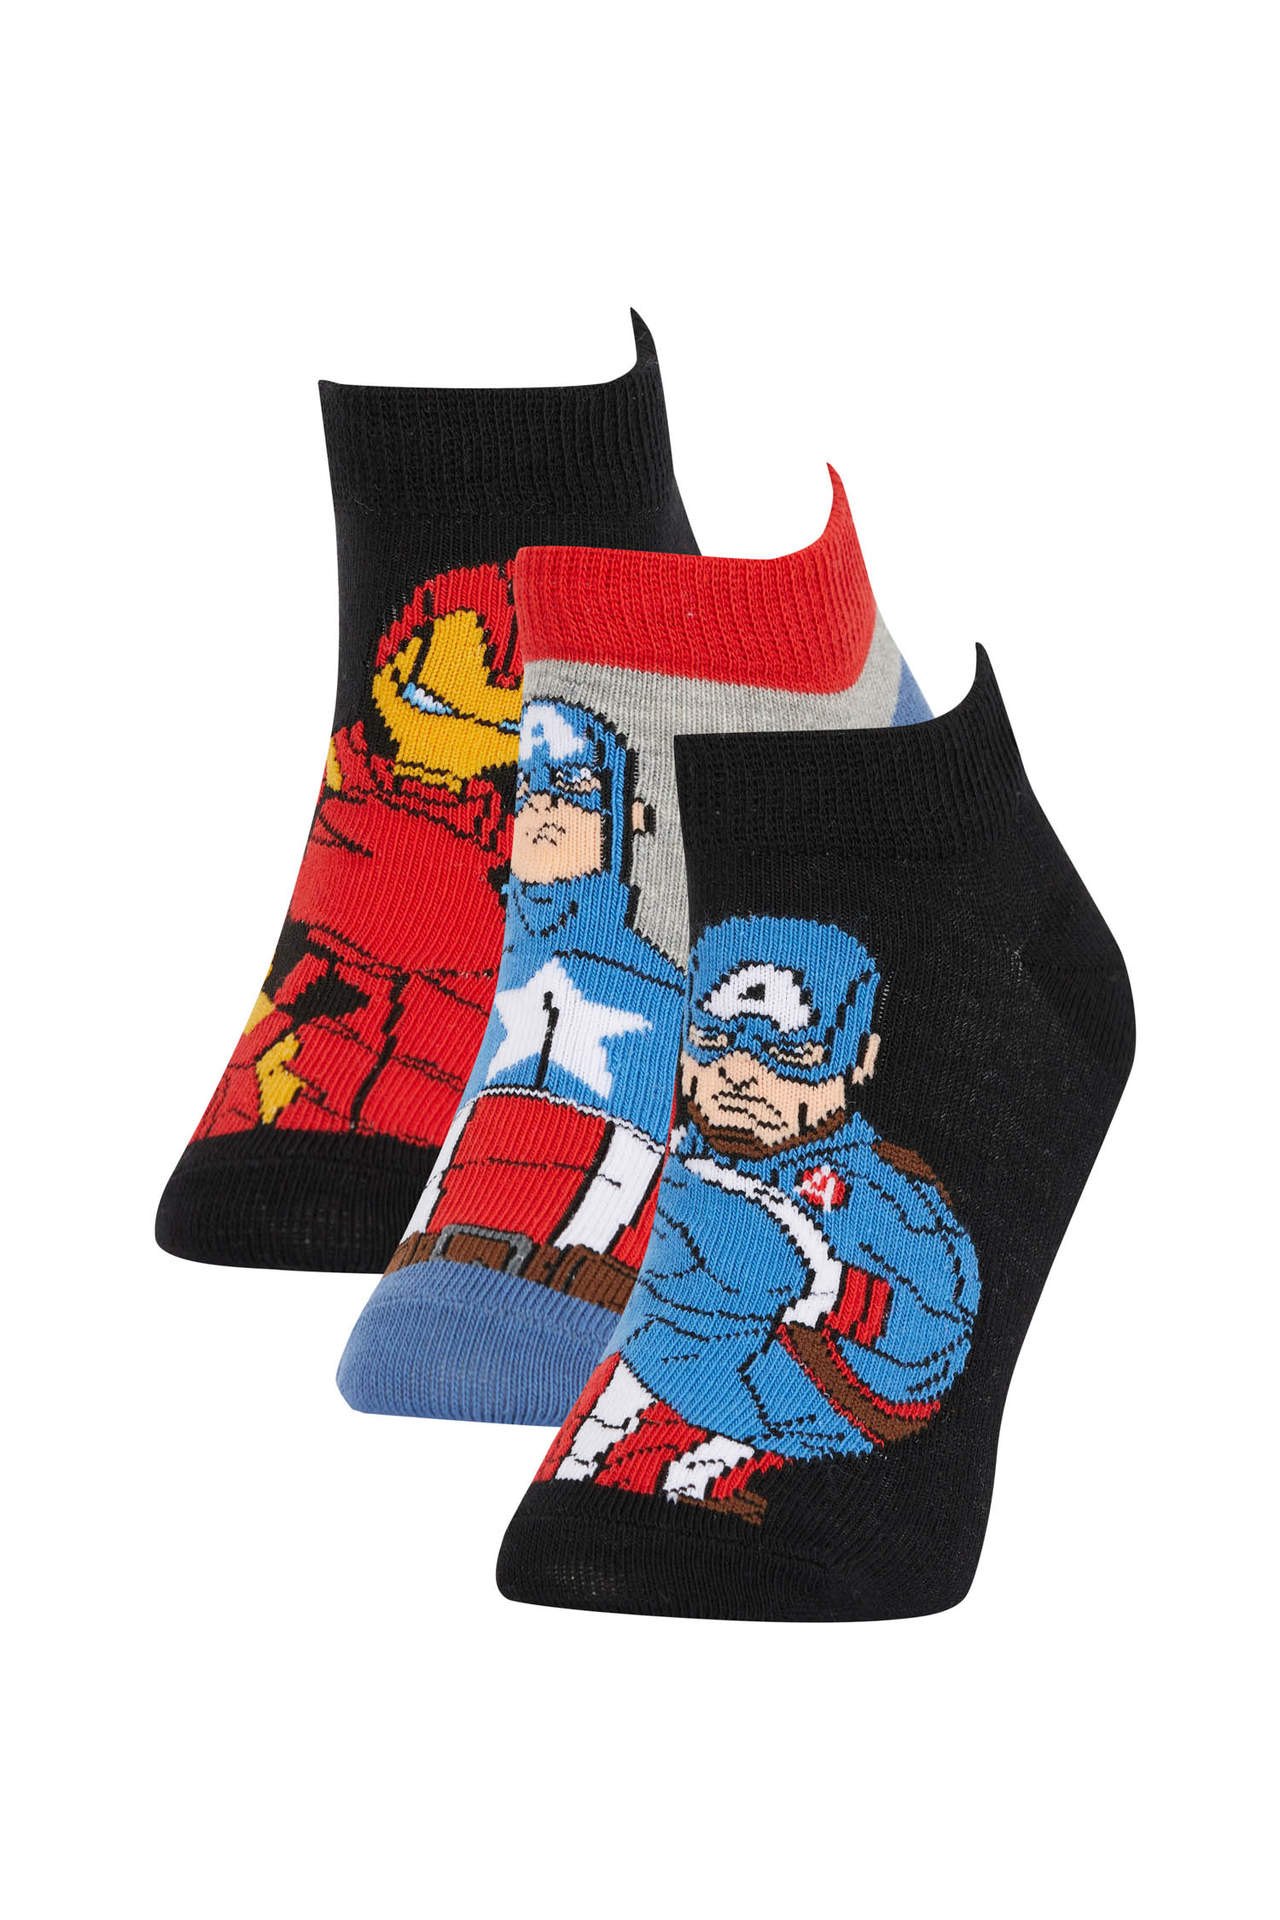 DEFACTO Boy Marvel Avengers Licensed 3-pack Cotton Booties Socks